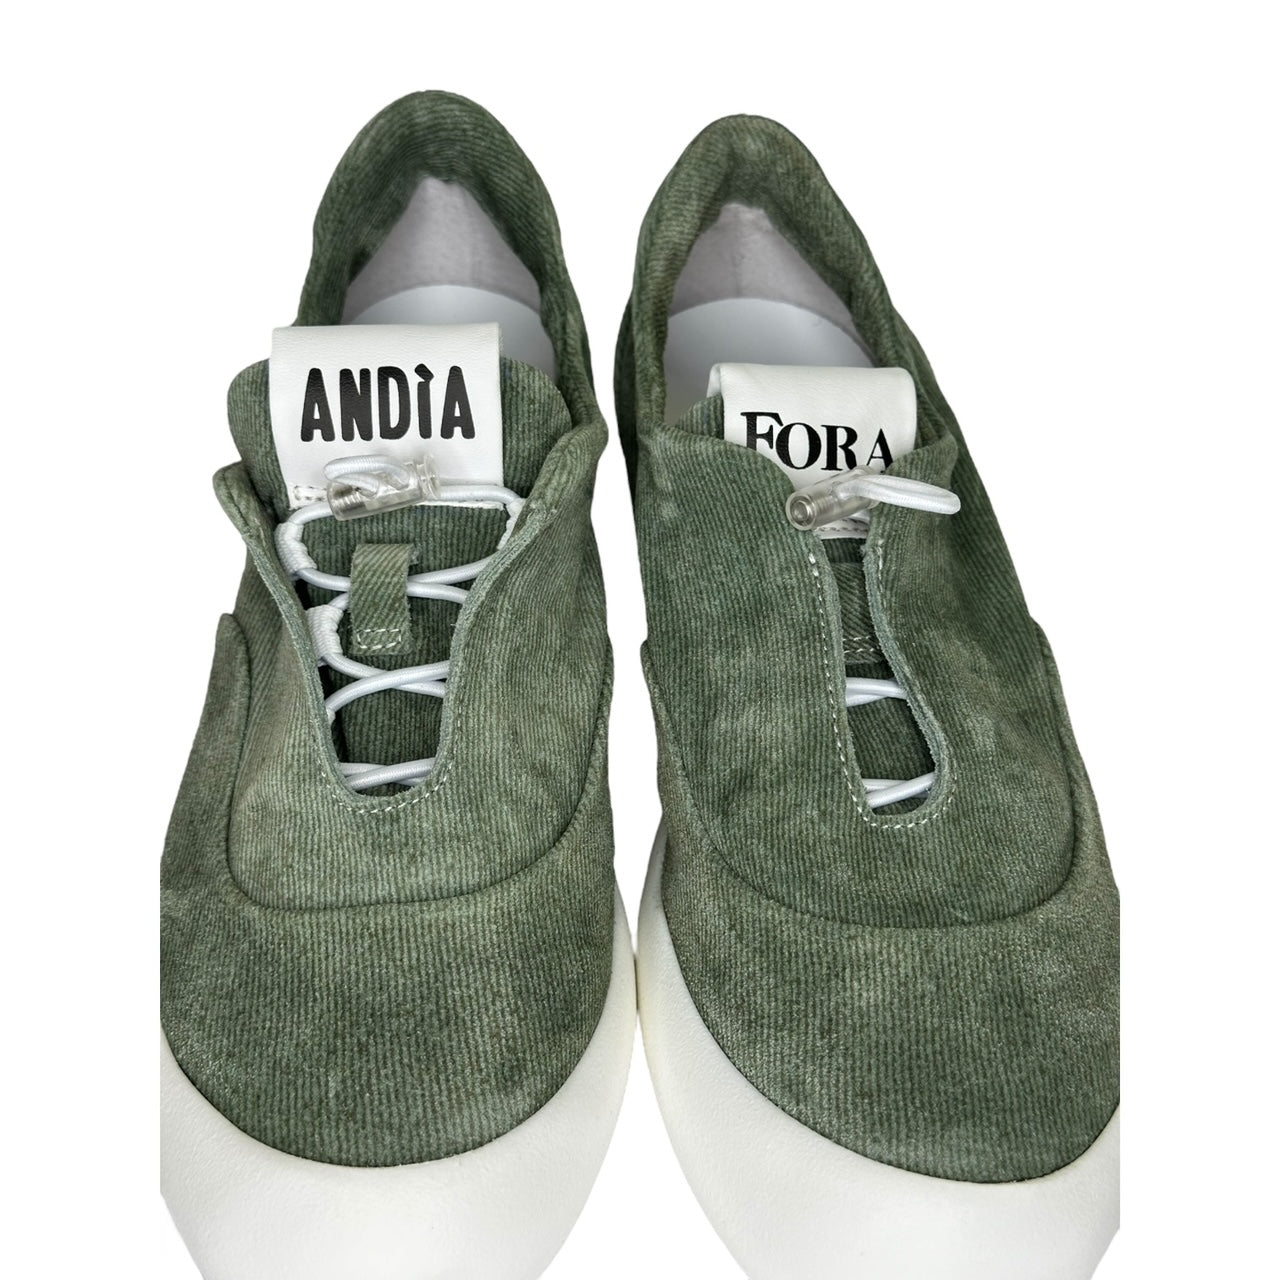 Взуття Andia Fora Nina solar suede jeans military